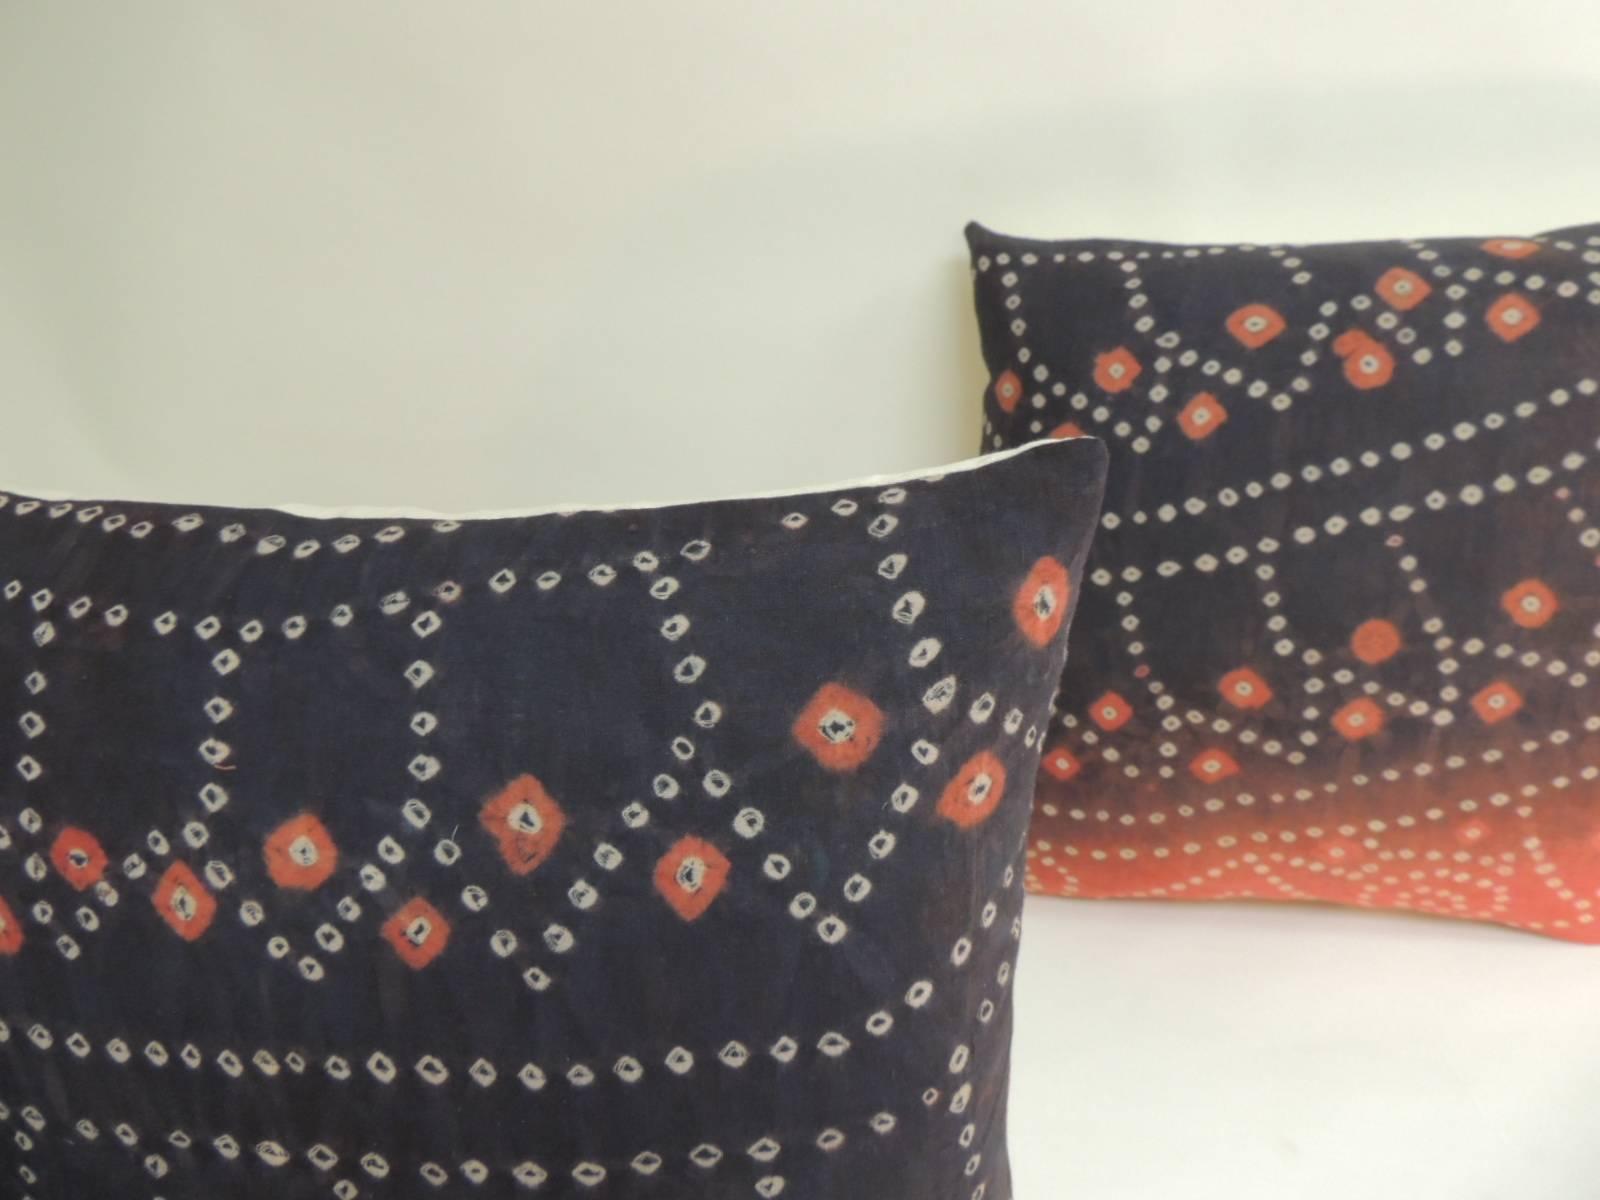 Chinese Export Pr. of Vintage Textile Asian Shibori Hand-Dyed Orange & Black Decorative Pillows